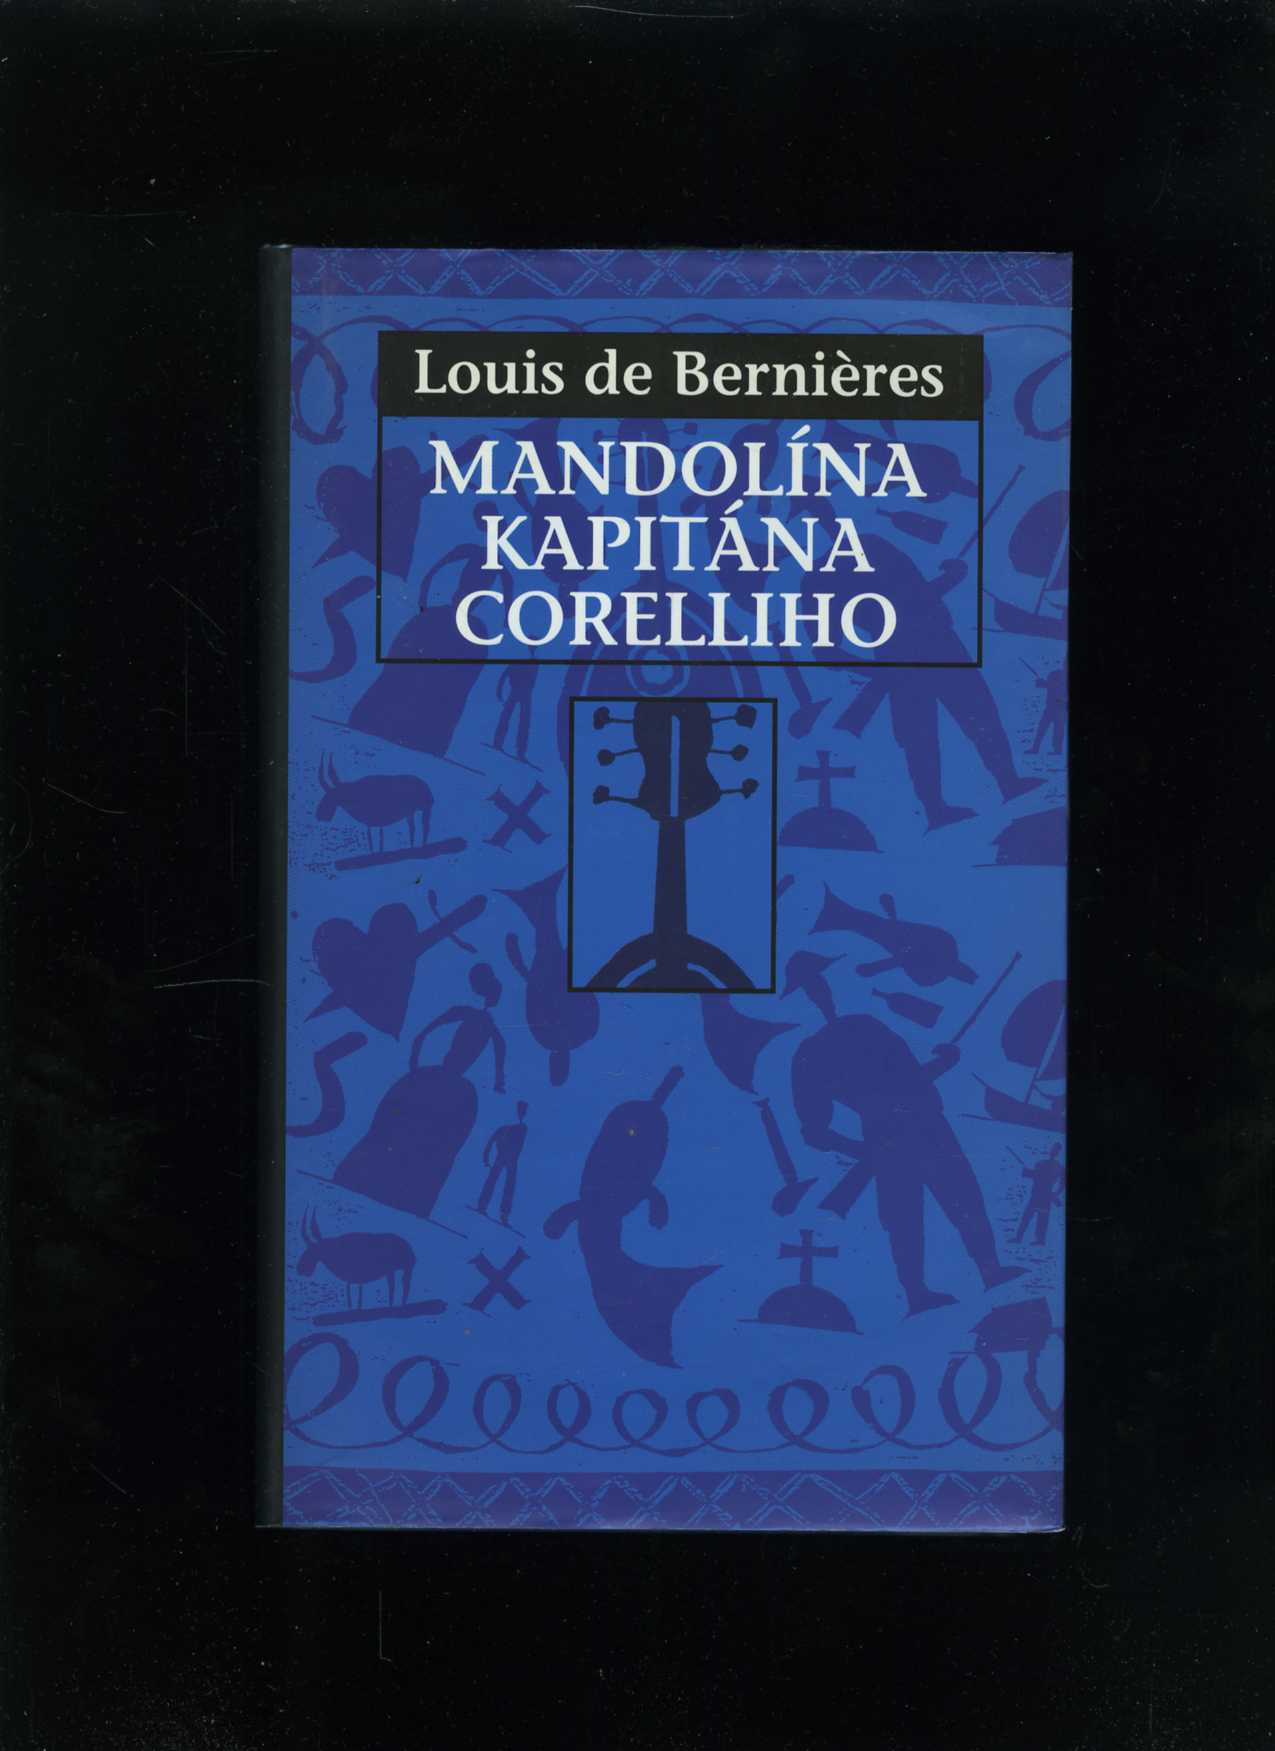 Mandolína kapitána Corelliho (Louis de Bernières)